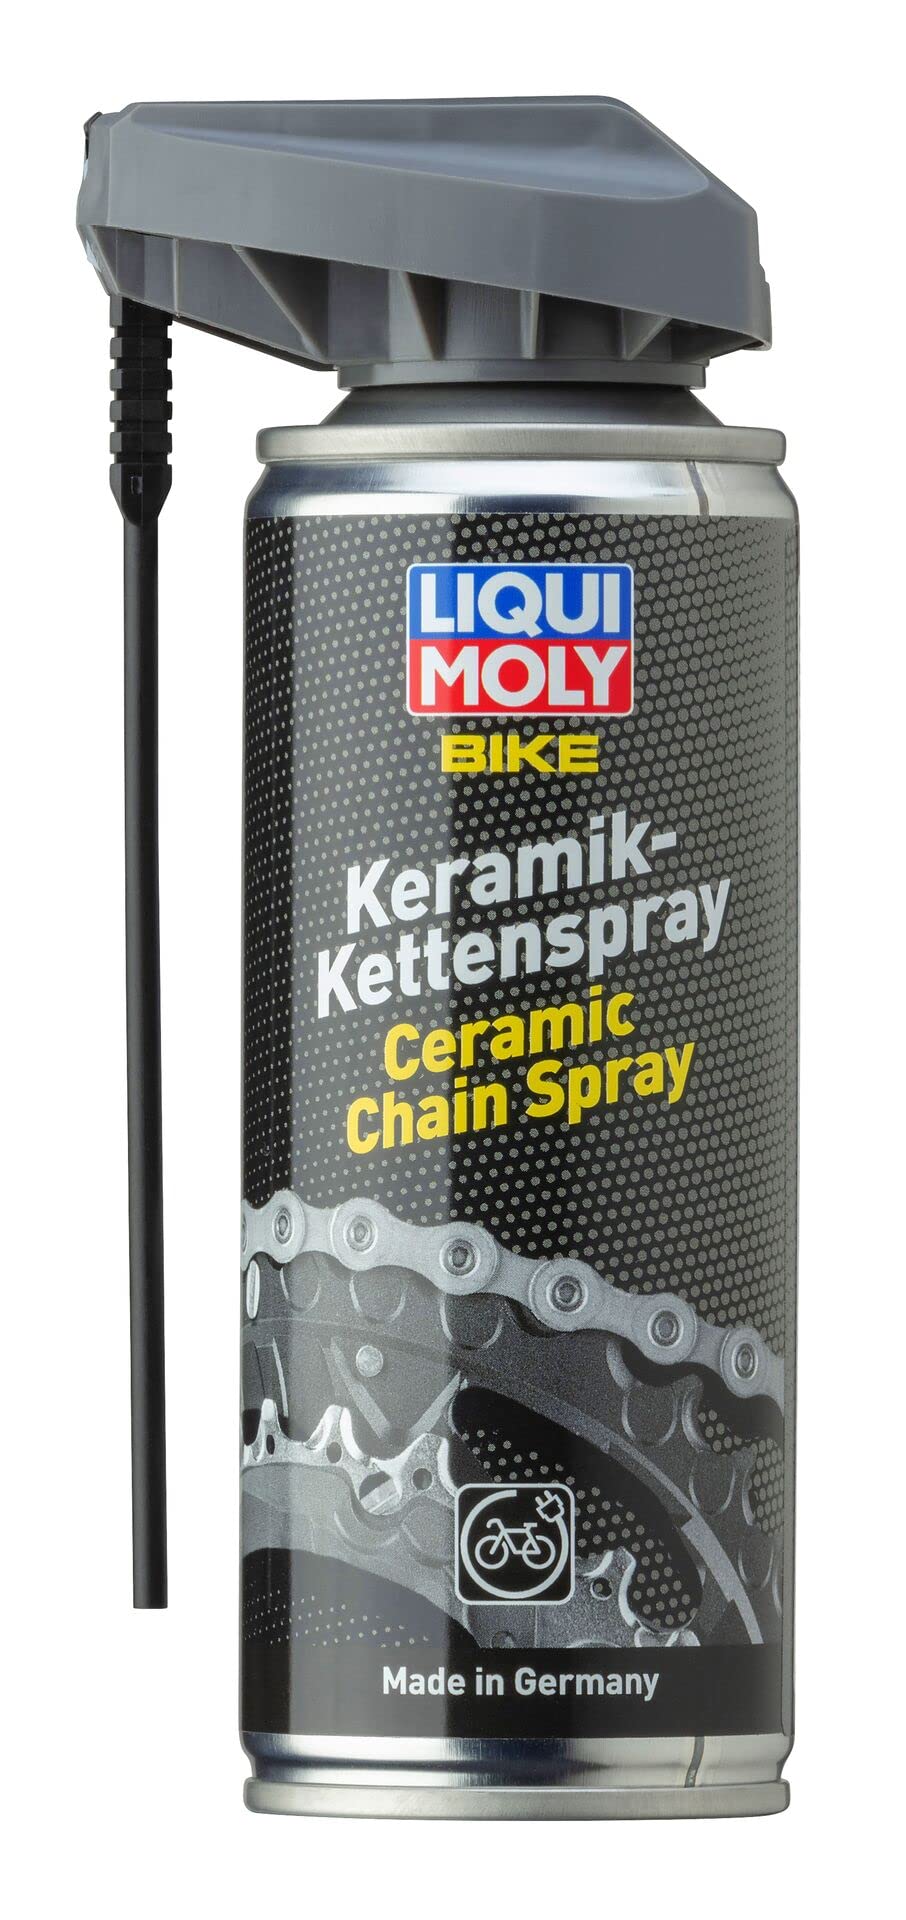 LIQUI MOLY Bike Keramik-Kettenspray | 200 ml | Fahrrad Haftschmierstoff ohne Kupfer | Art.-Nr.: 21692 von Liqui Moly